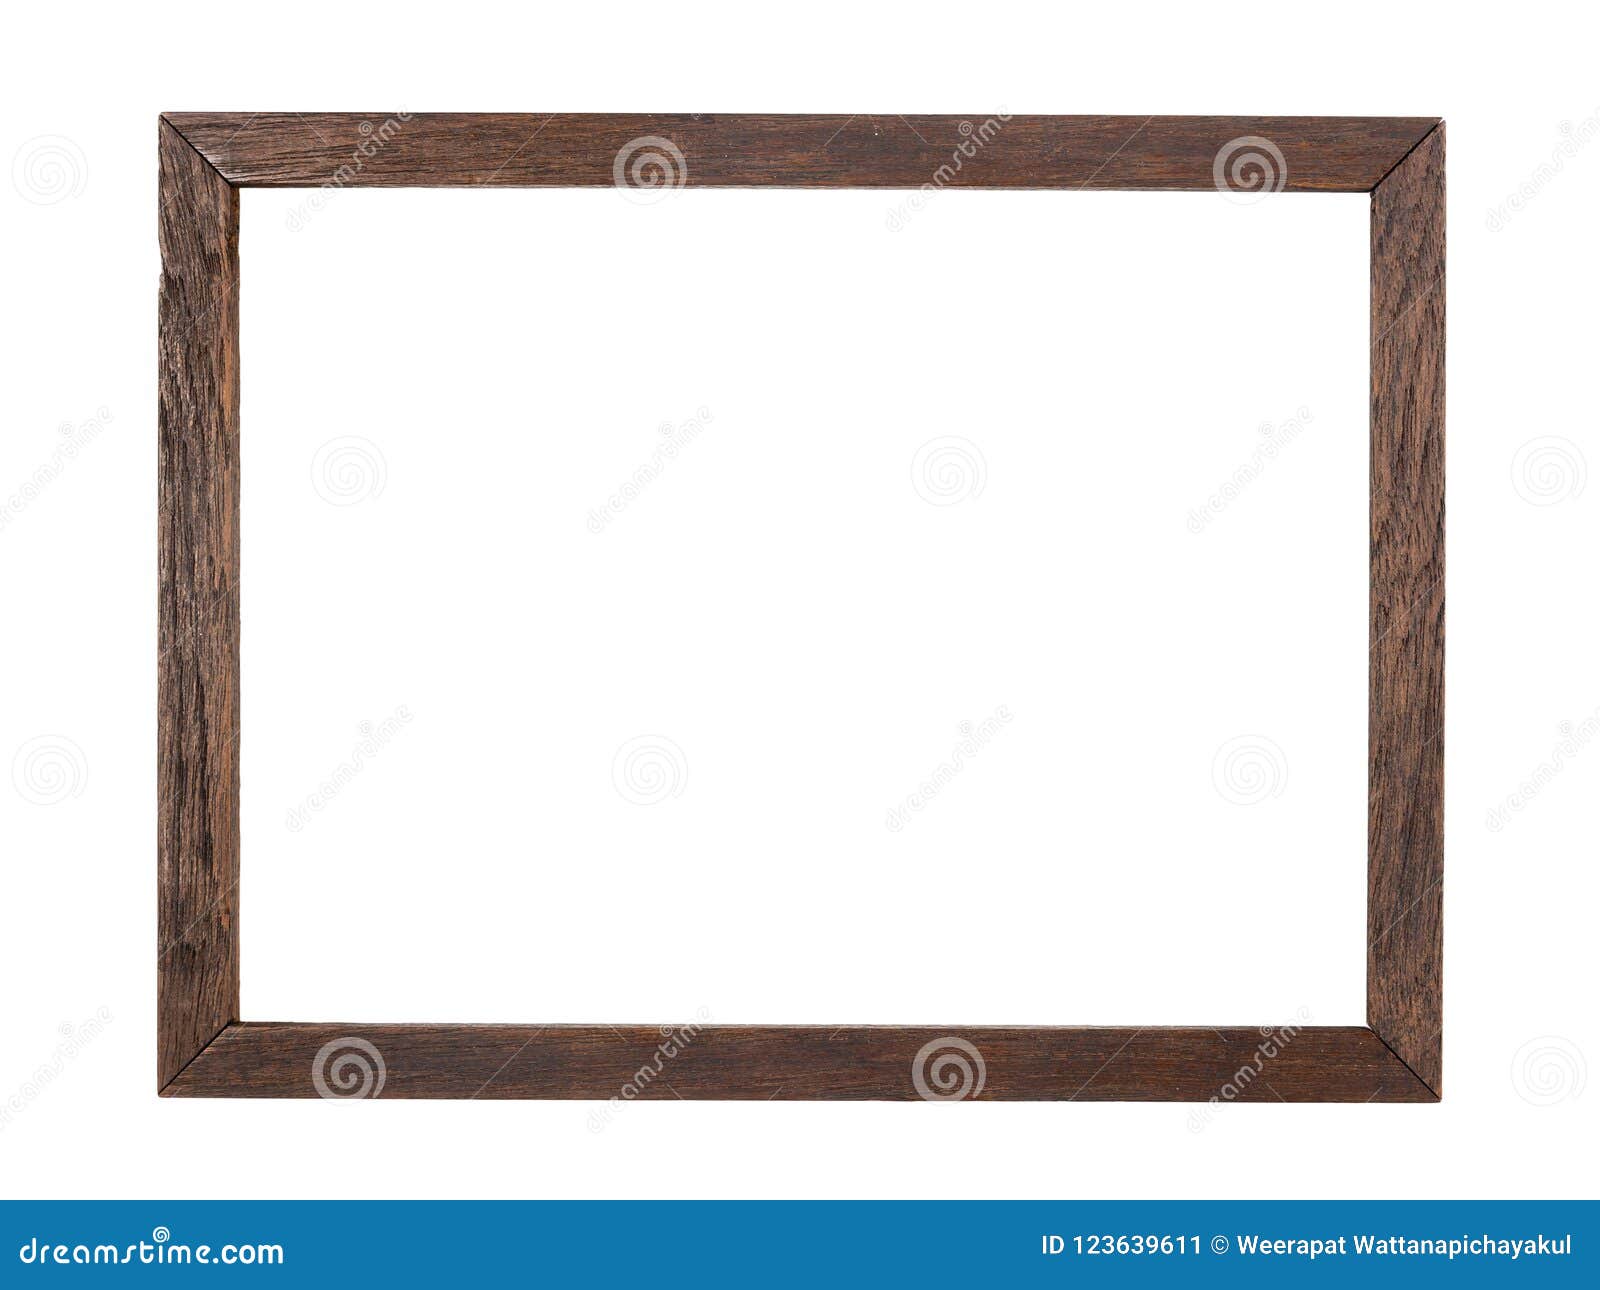 rustic wood frame